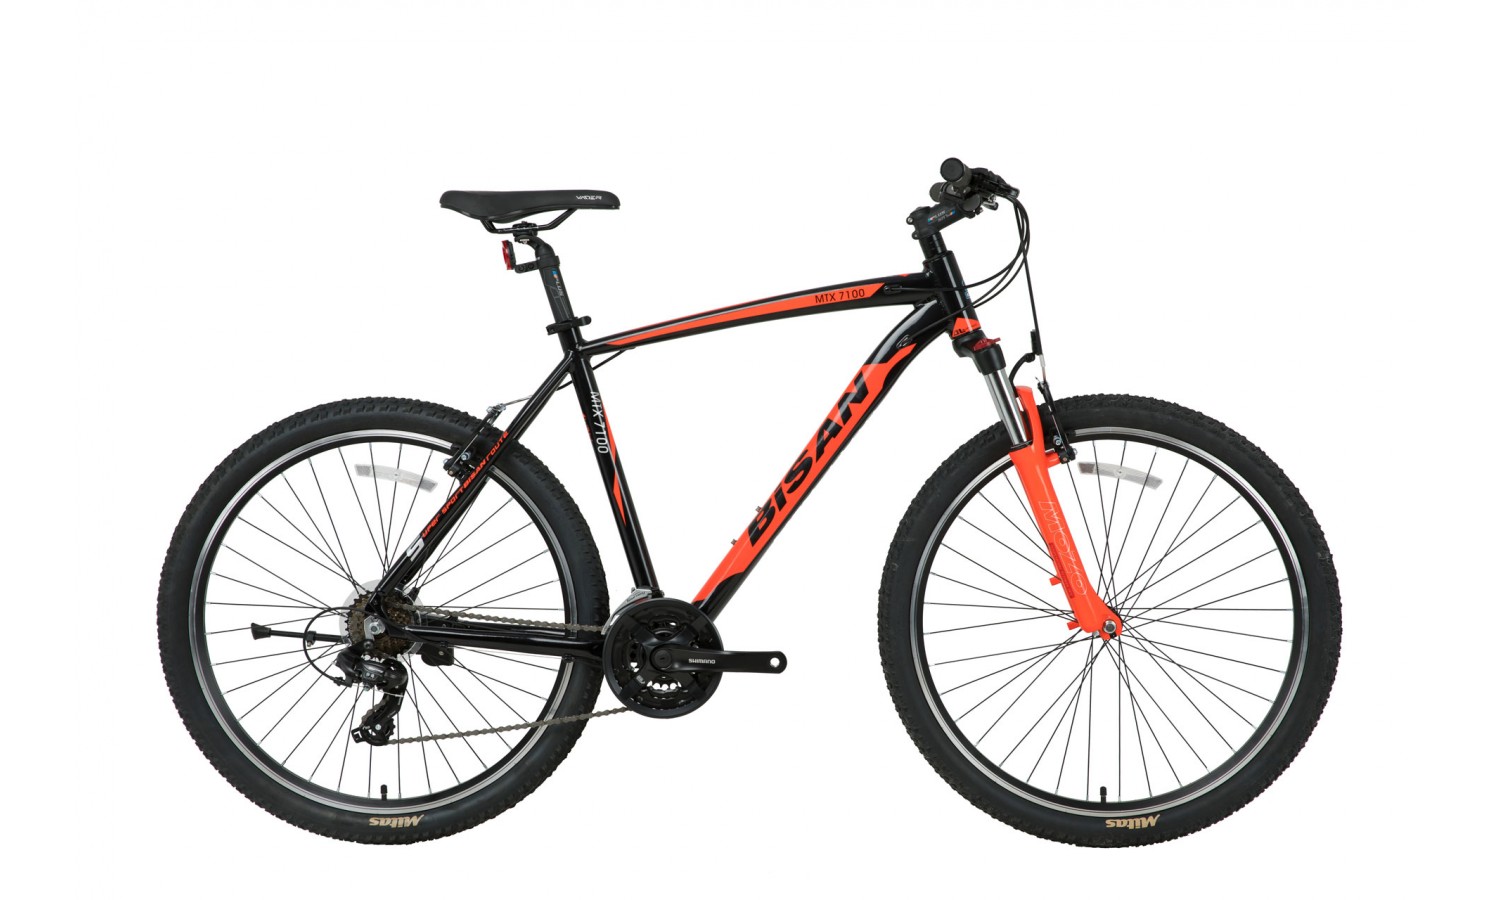 Bisan Mtx 7100 26 V Dağ Bisikleti (Siyah-Kırmızı)